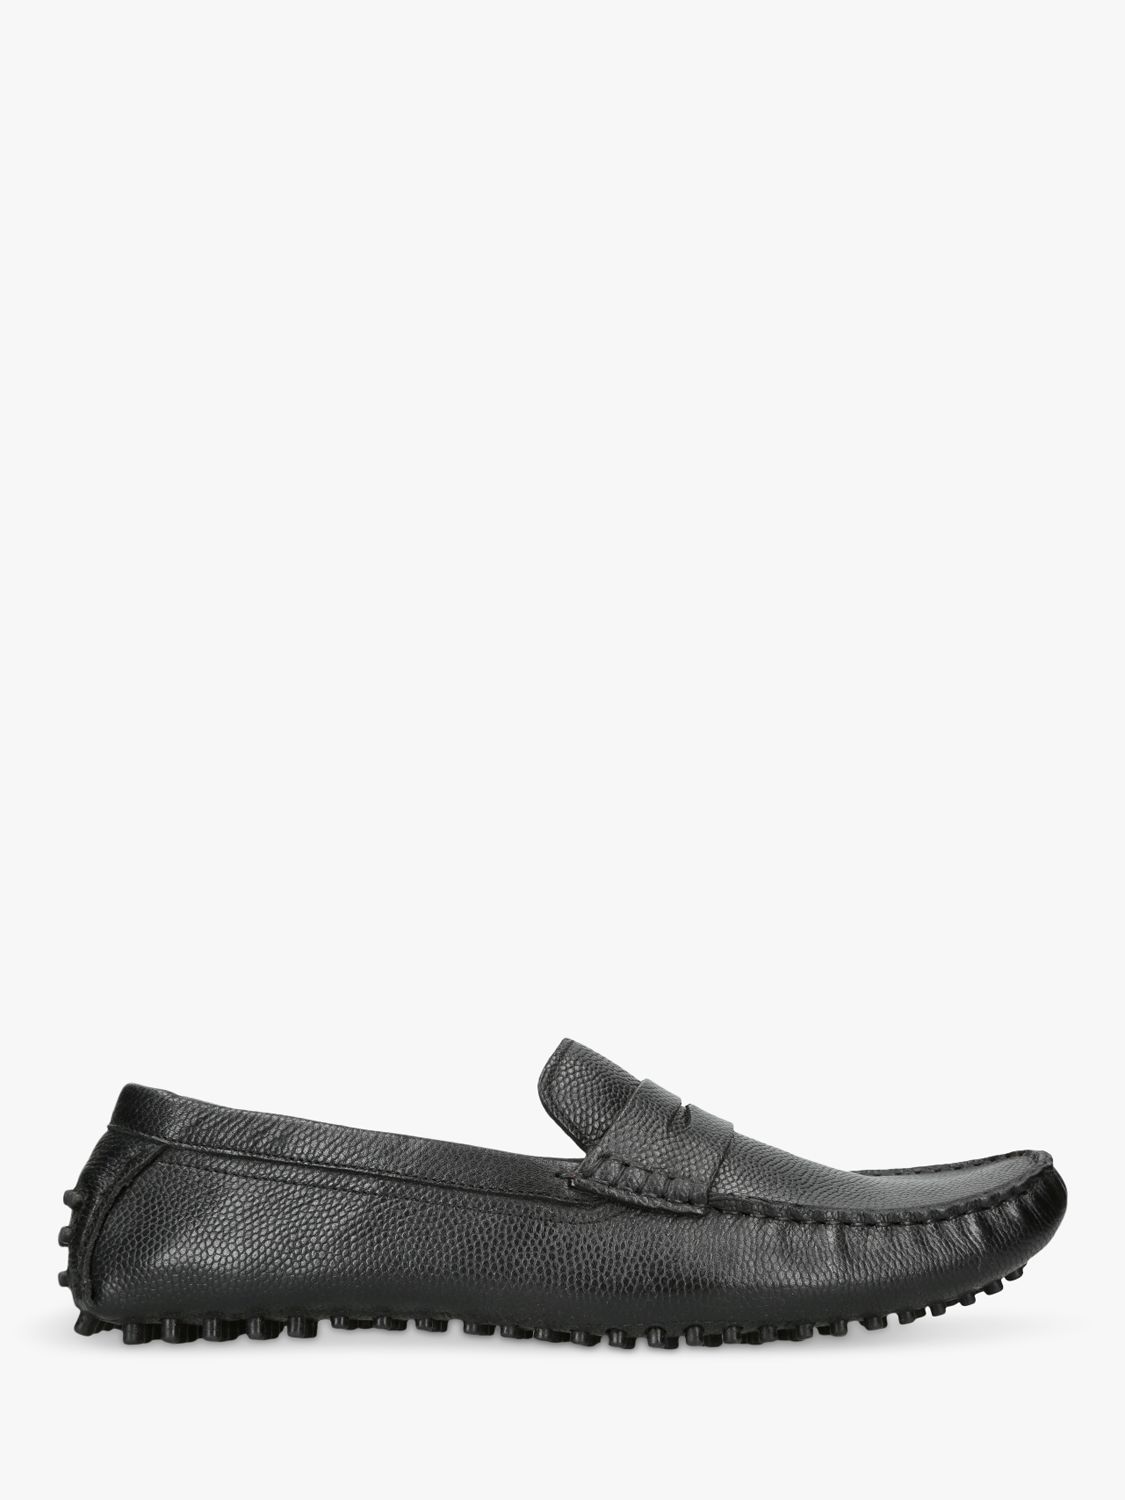 KG Kurt Geiger Rocky Leather Loafers, Black, 6